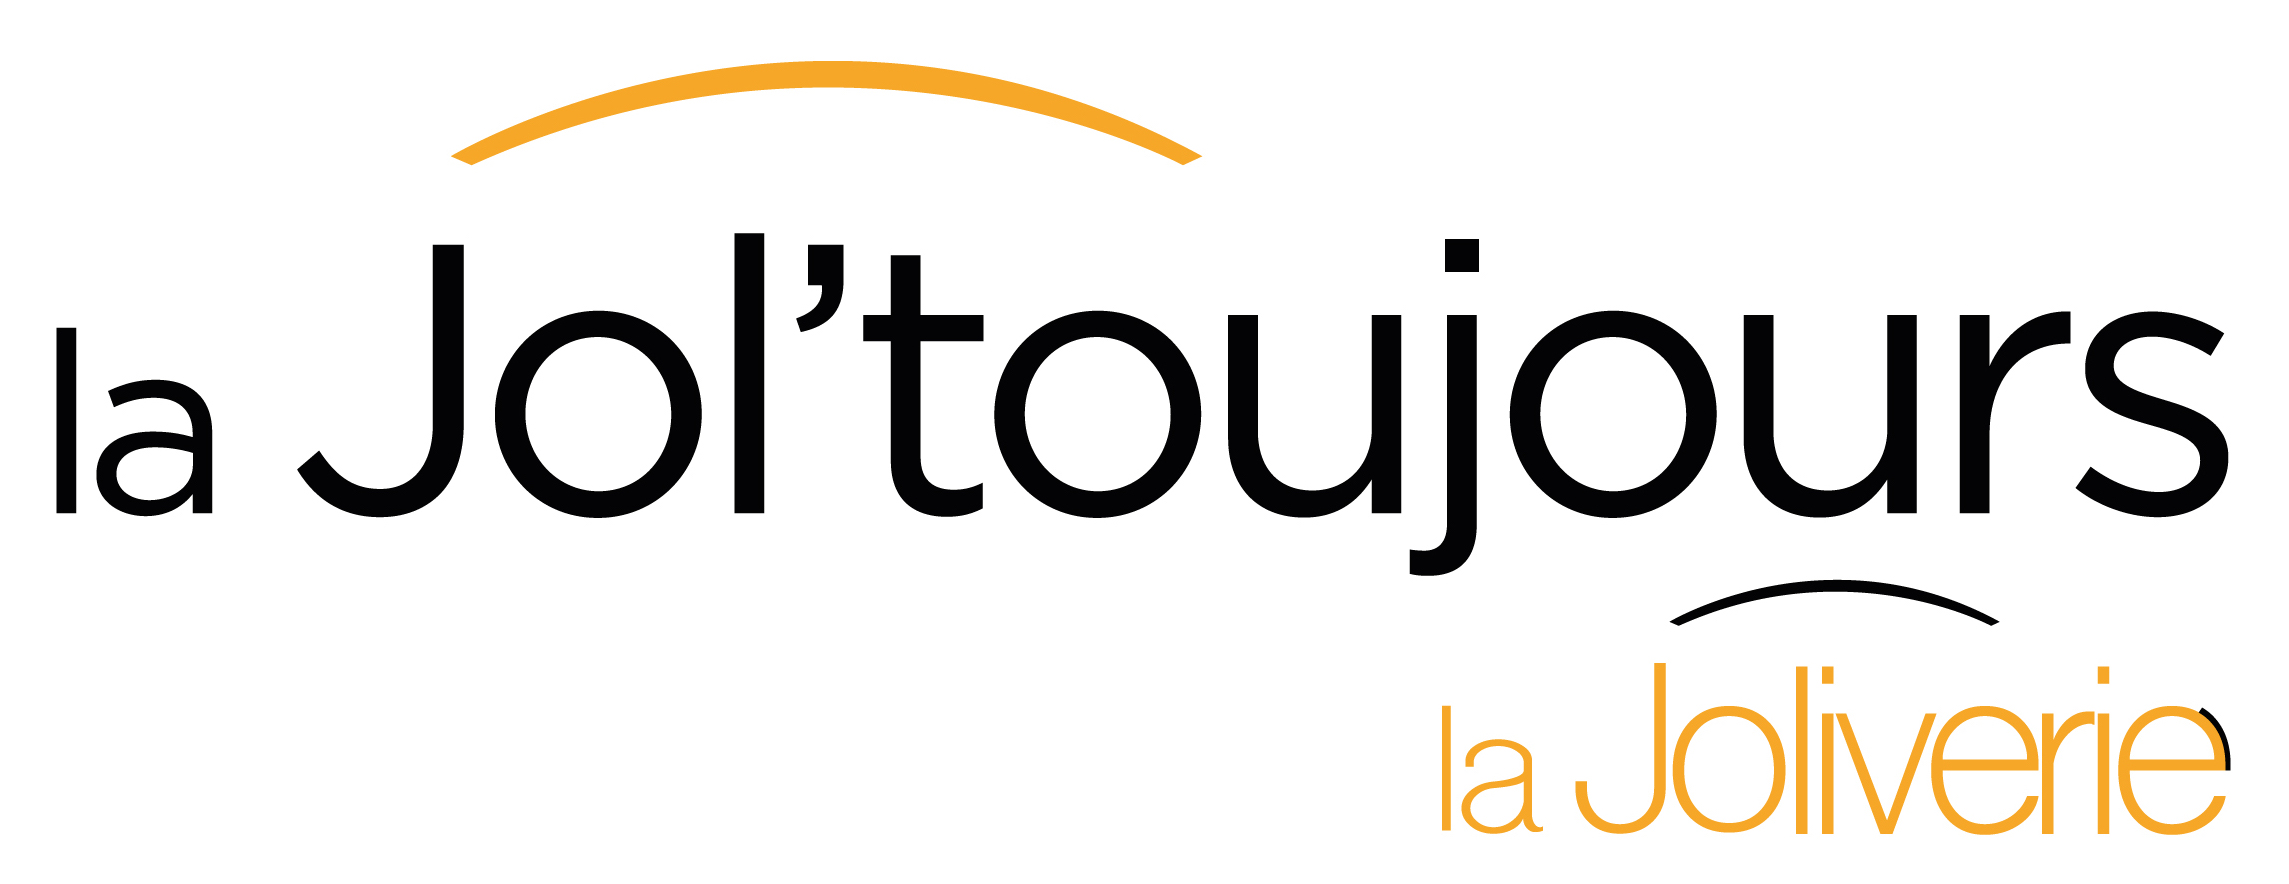 Logo_LaJolToujours-01